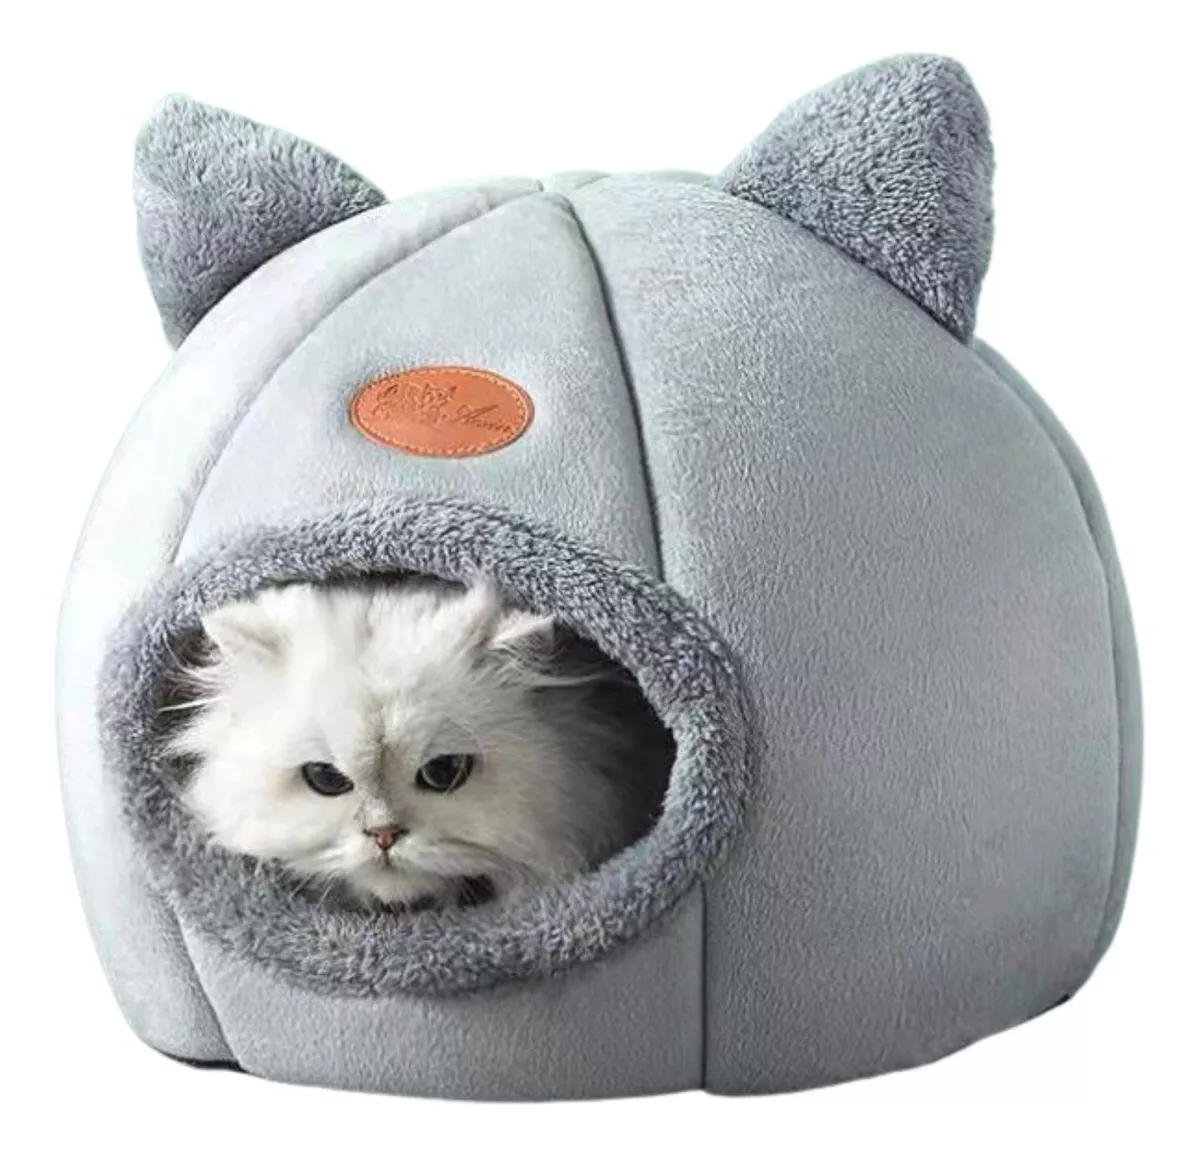 Primera imagen para búsqueda de cama gato iglu